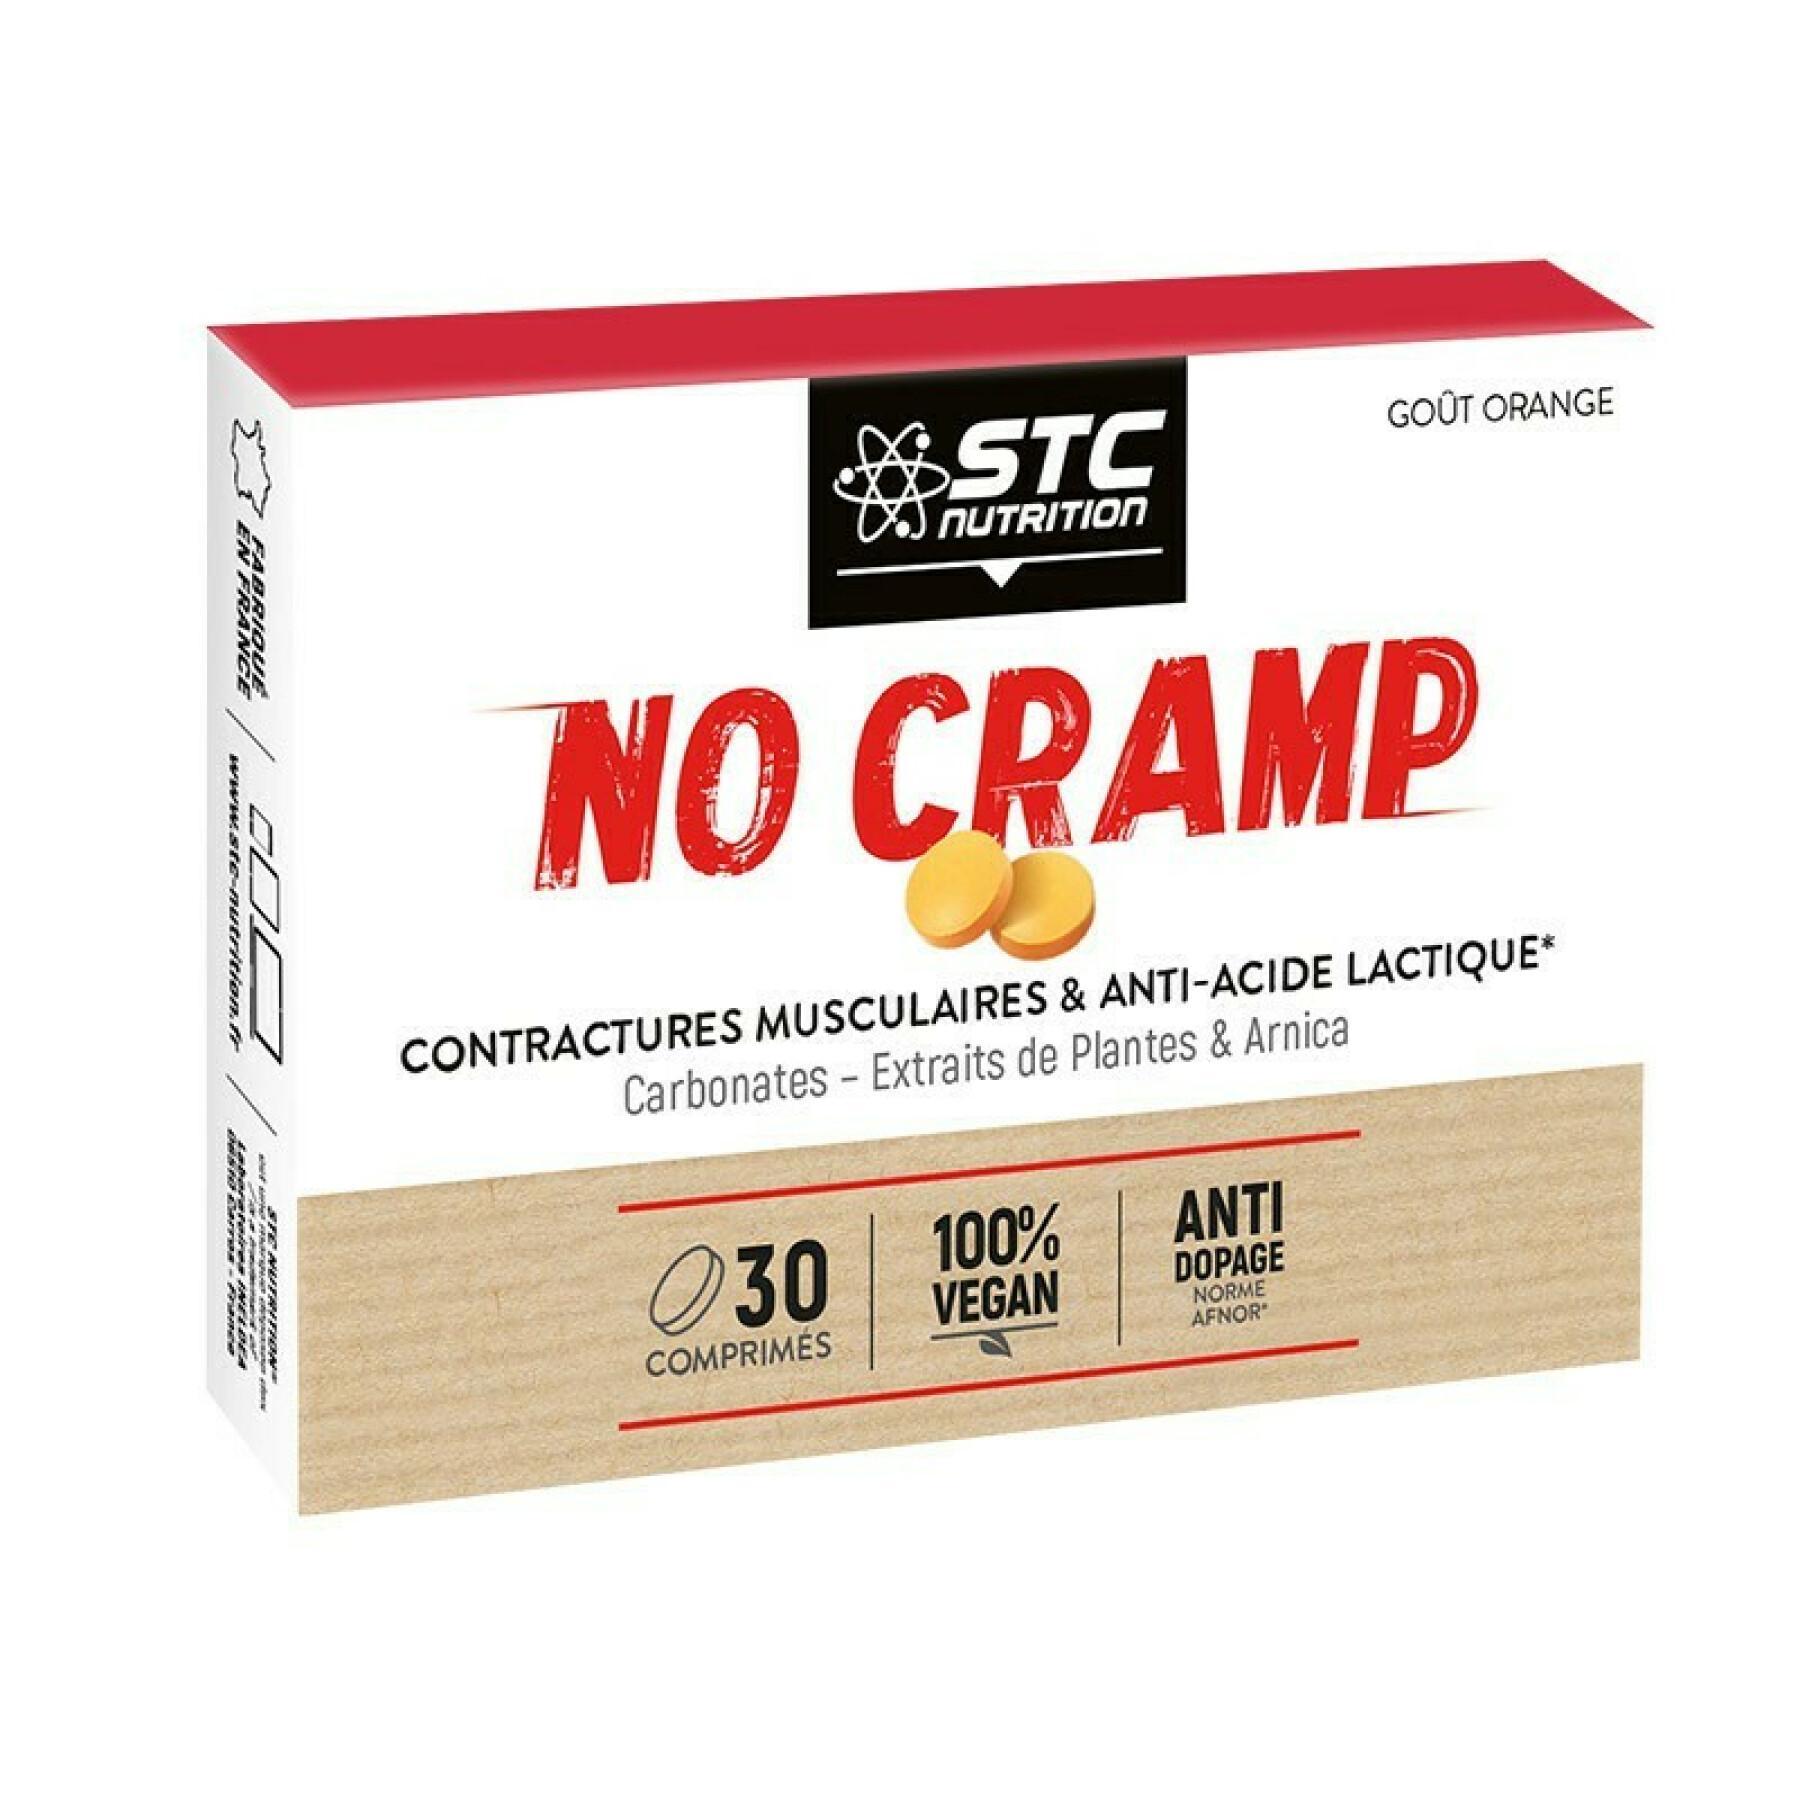 Muscle contracting & anti lactic acid no crampno cramp STC Nutrition - orange - 30 comprimés à croquer